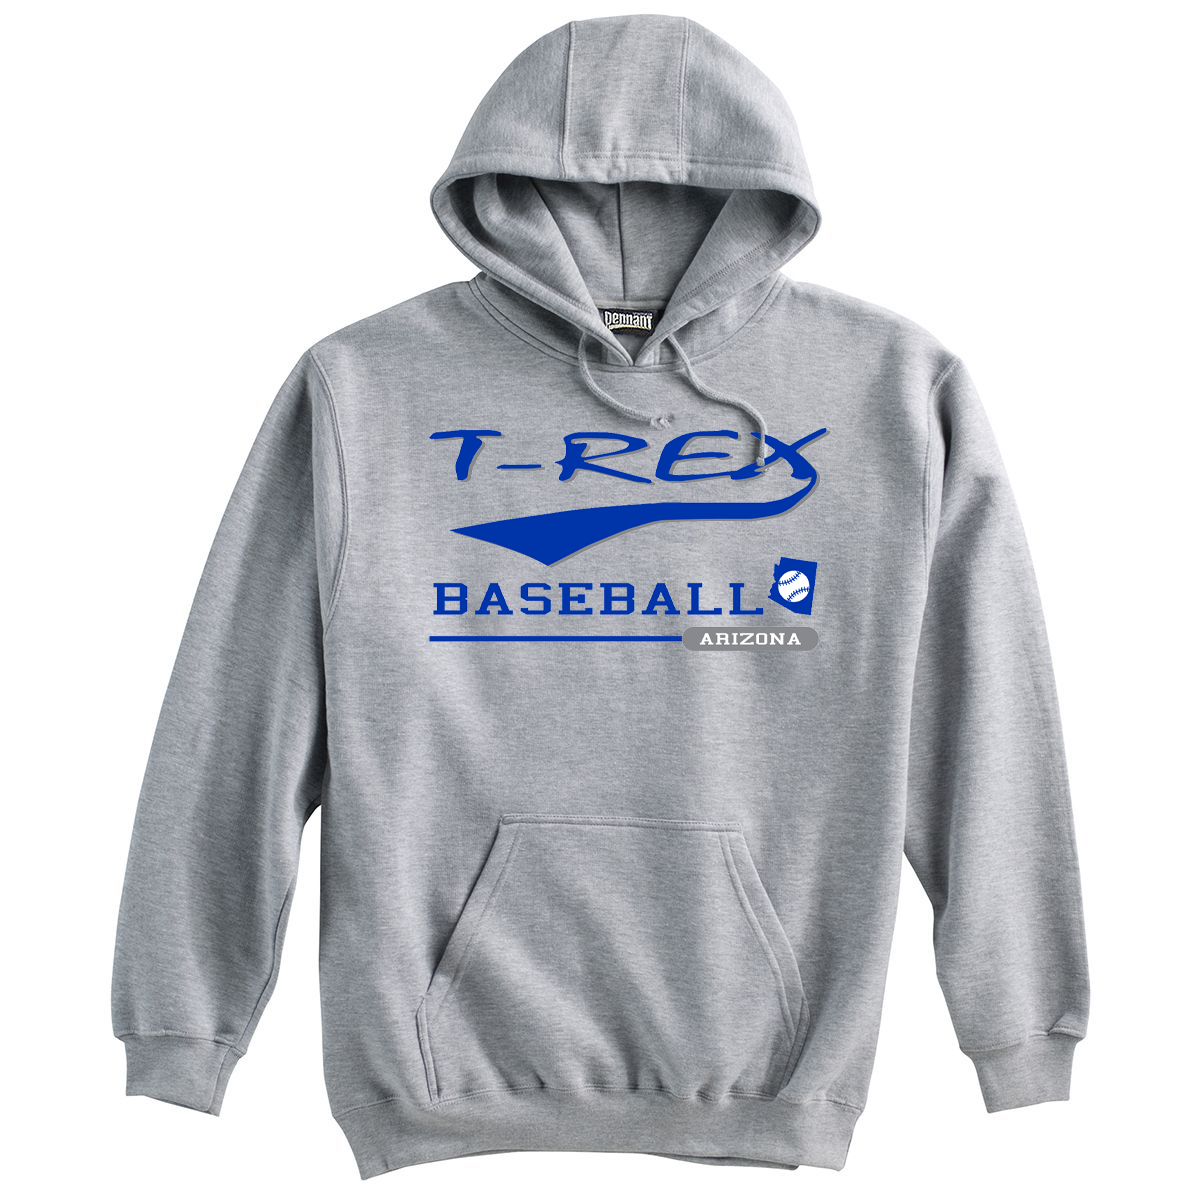 T-Rex Baseball Sweatshirt